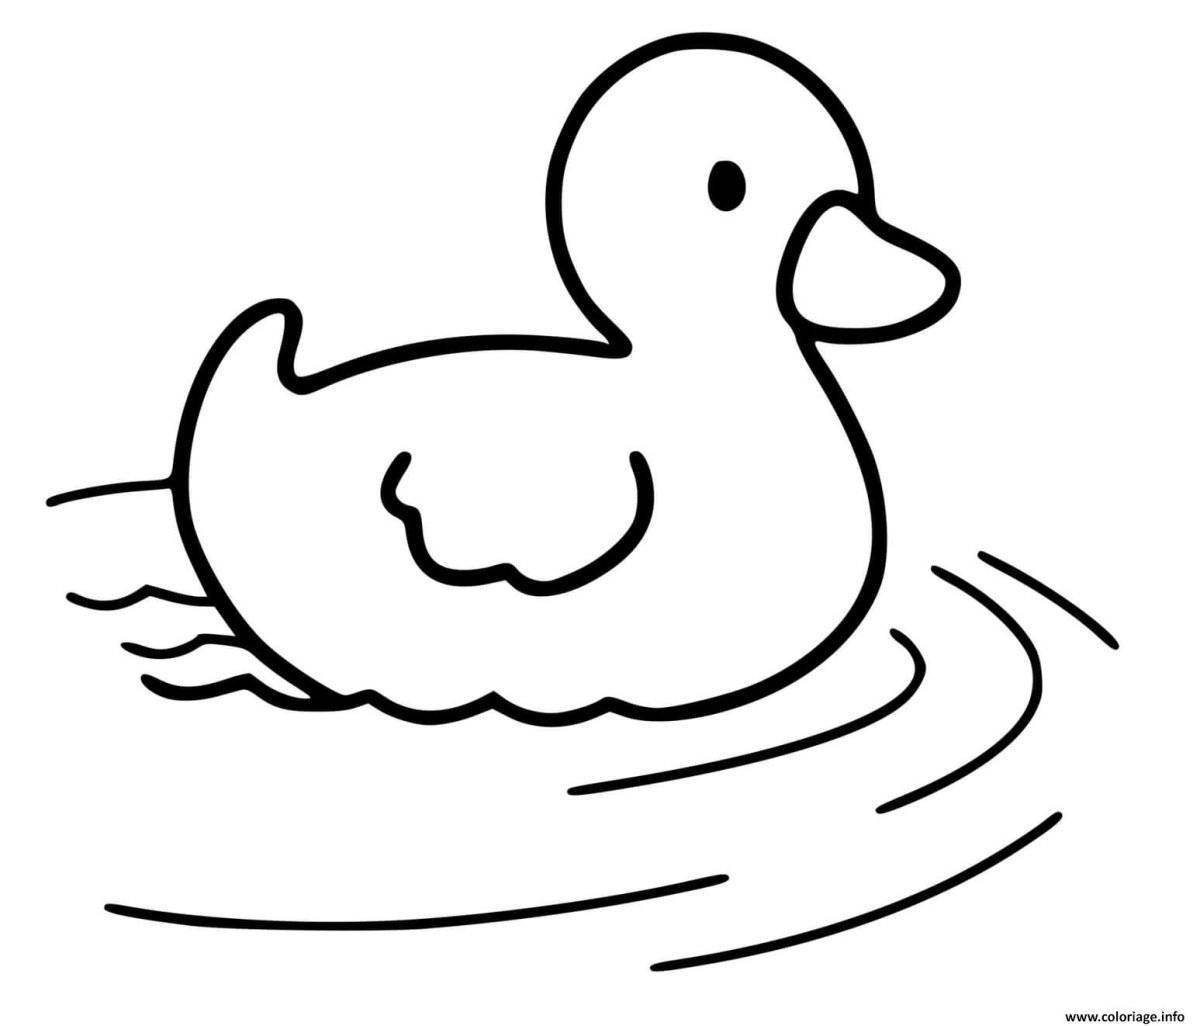 Splendid duck lalaphan coloring book for kids